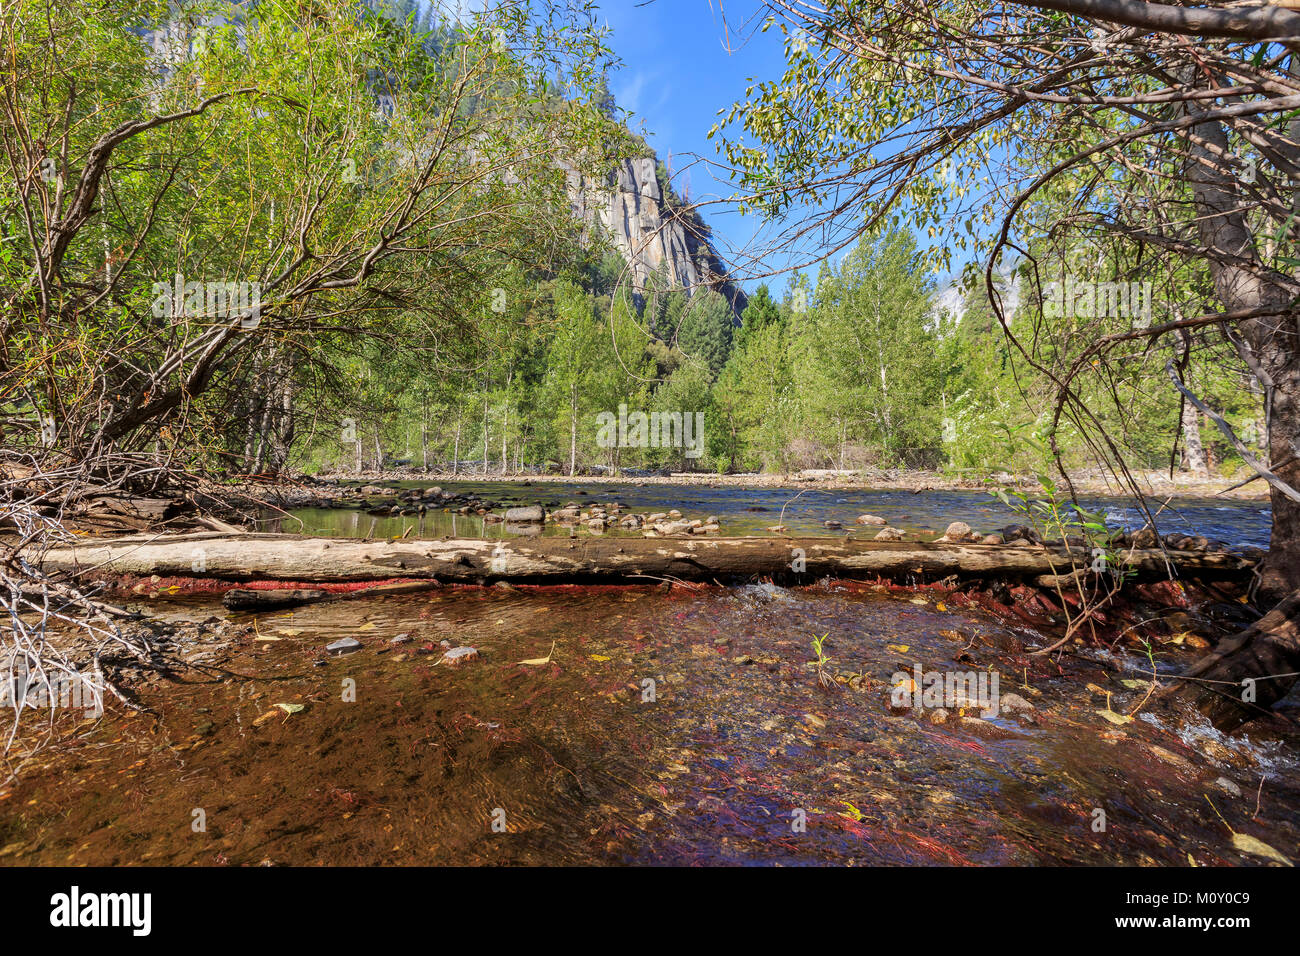 The beautiful merced river in Yosemite National Park, California, USA Stock Photo